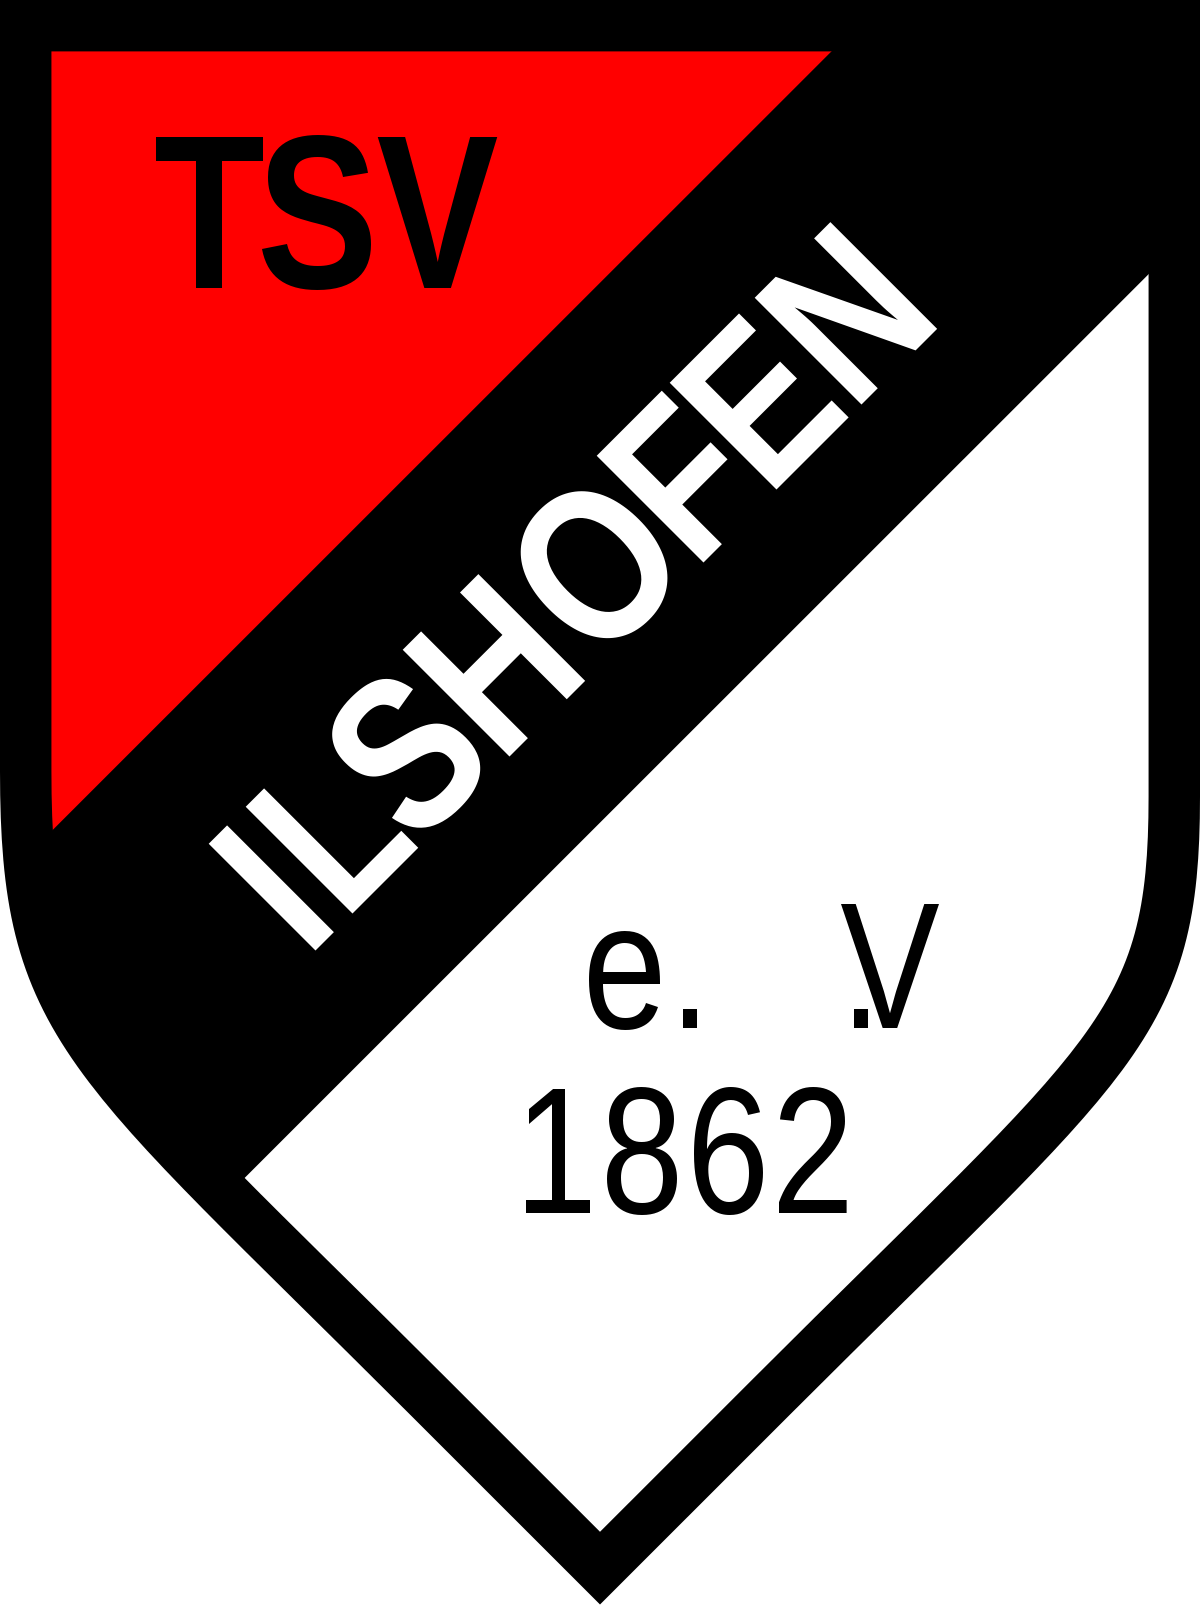 TSV Ilshofen team logo